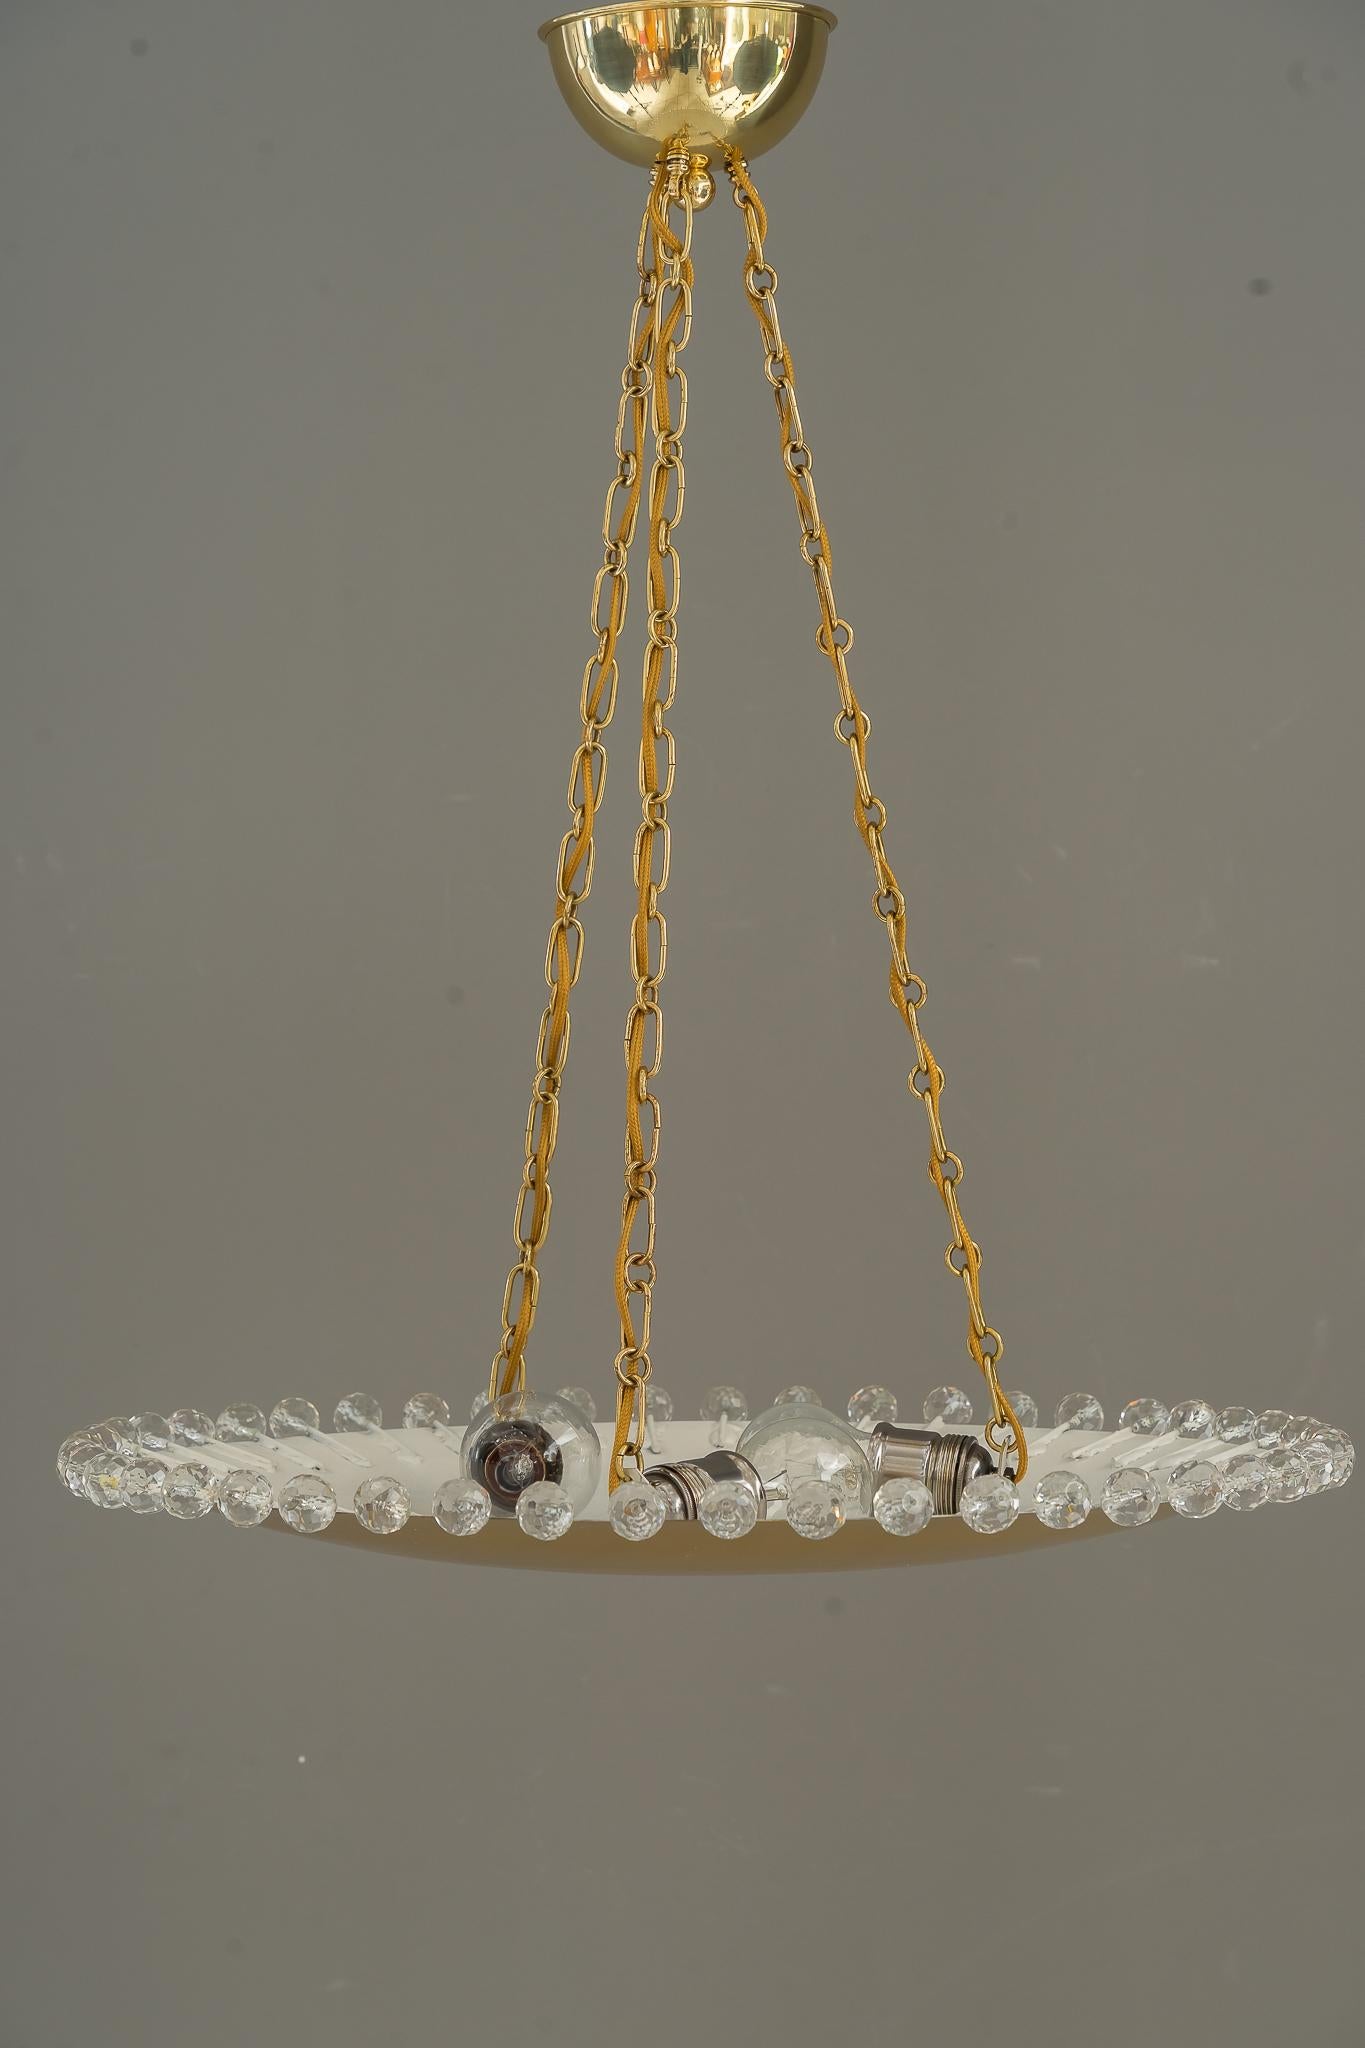 Rupert Nikoll pendant Vienna, around 1950s.
Brass polished and stove enamelled.
3 x e27 (bulbs).